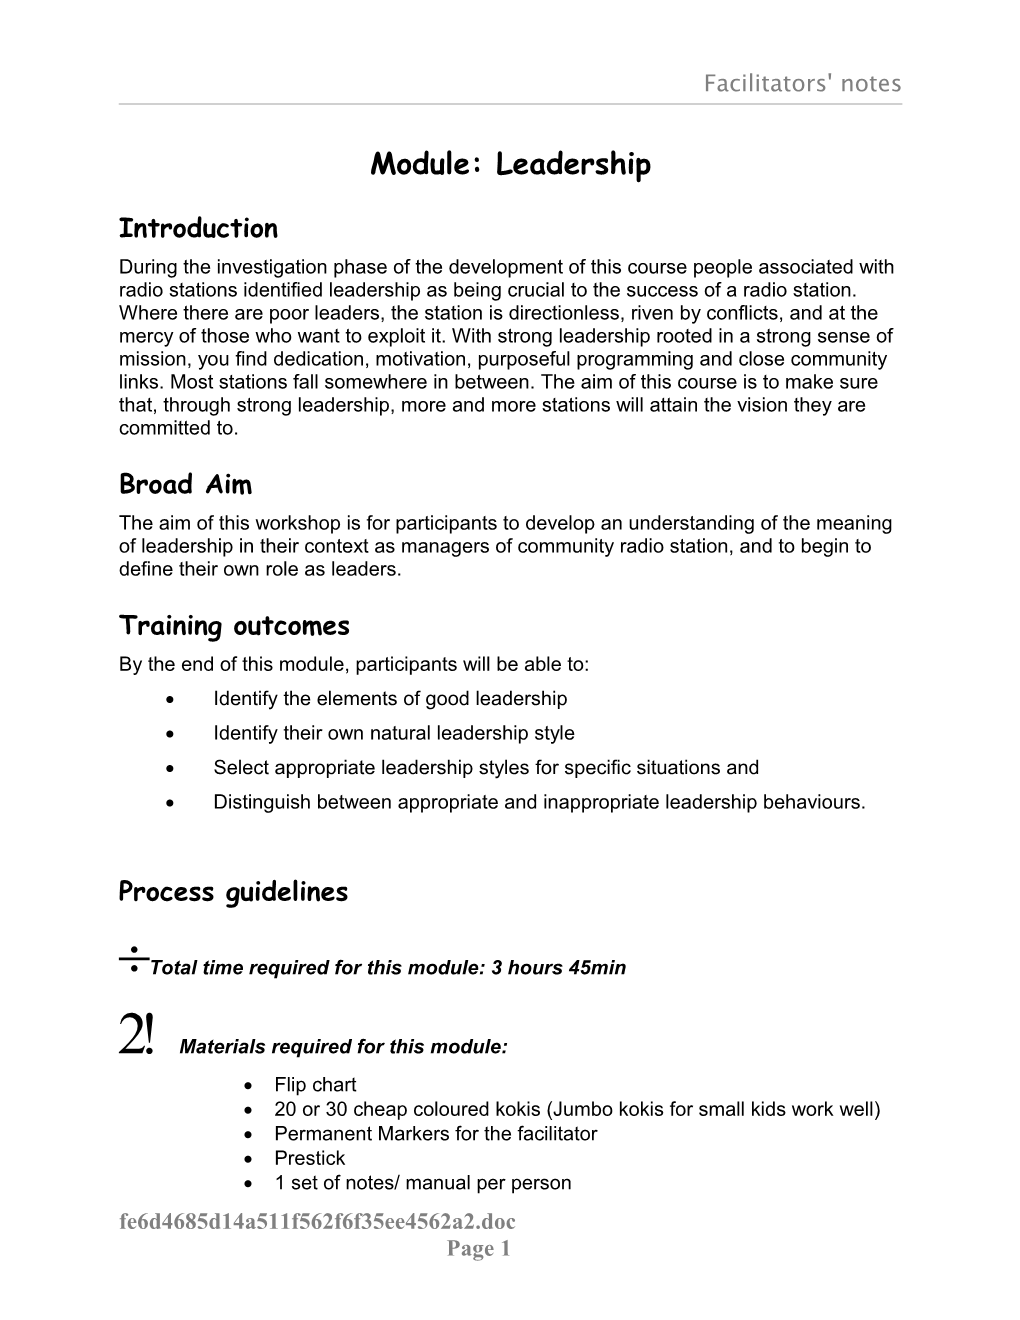 Module: Leadership